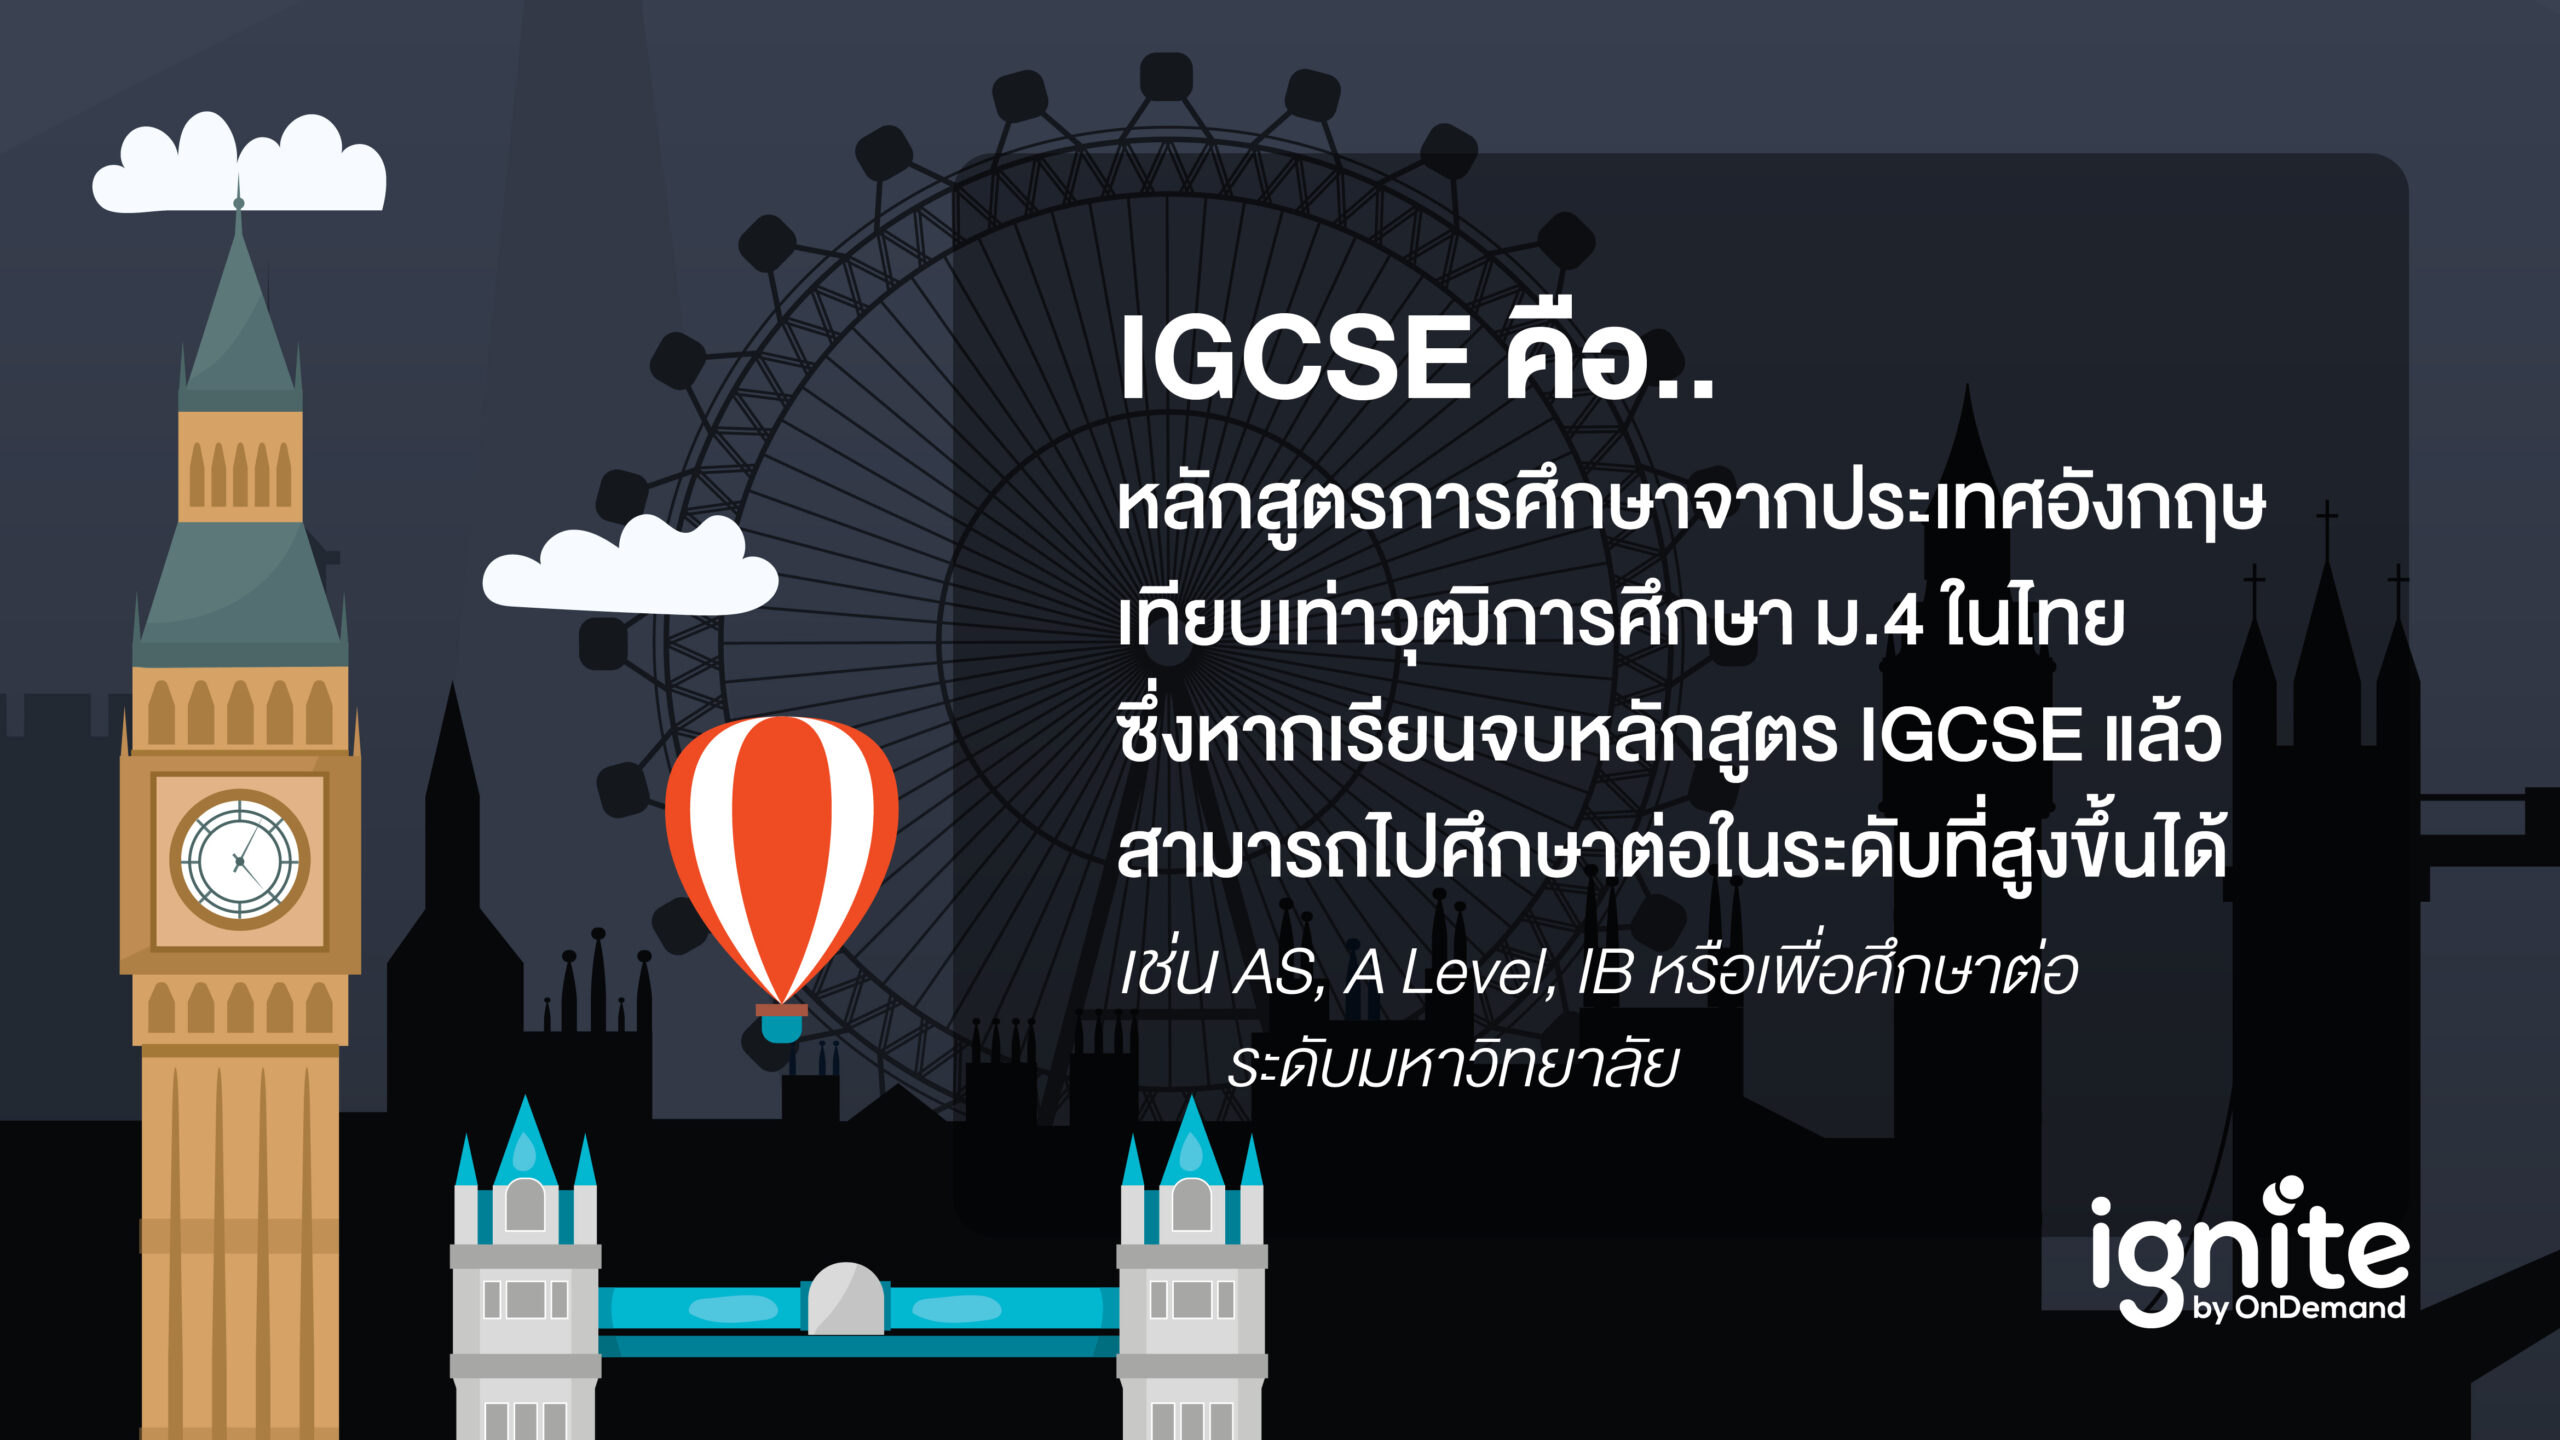 IGCSE คือ - Bigcover2